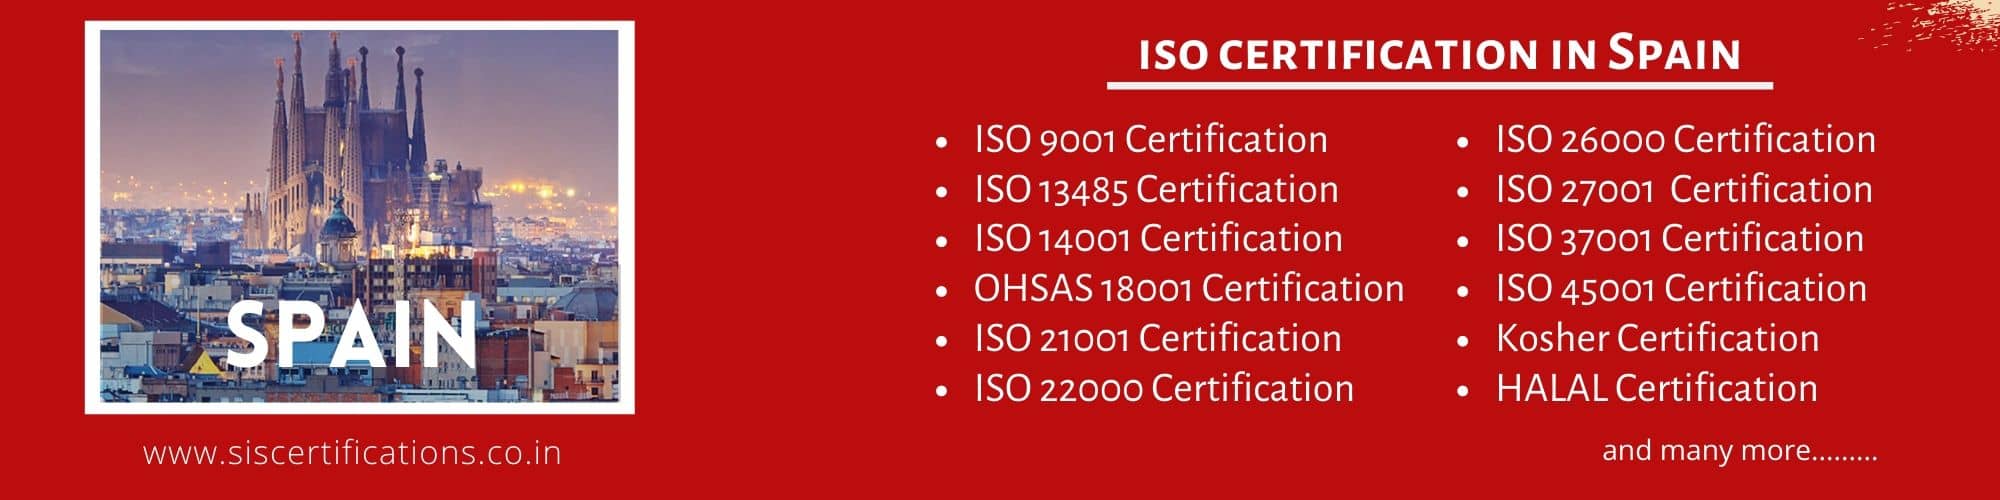 iso certification in Croatia;